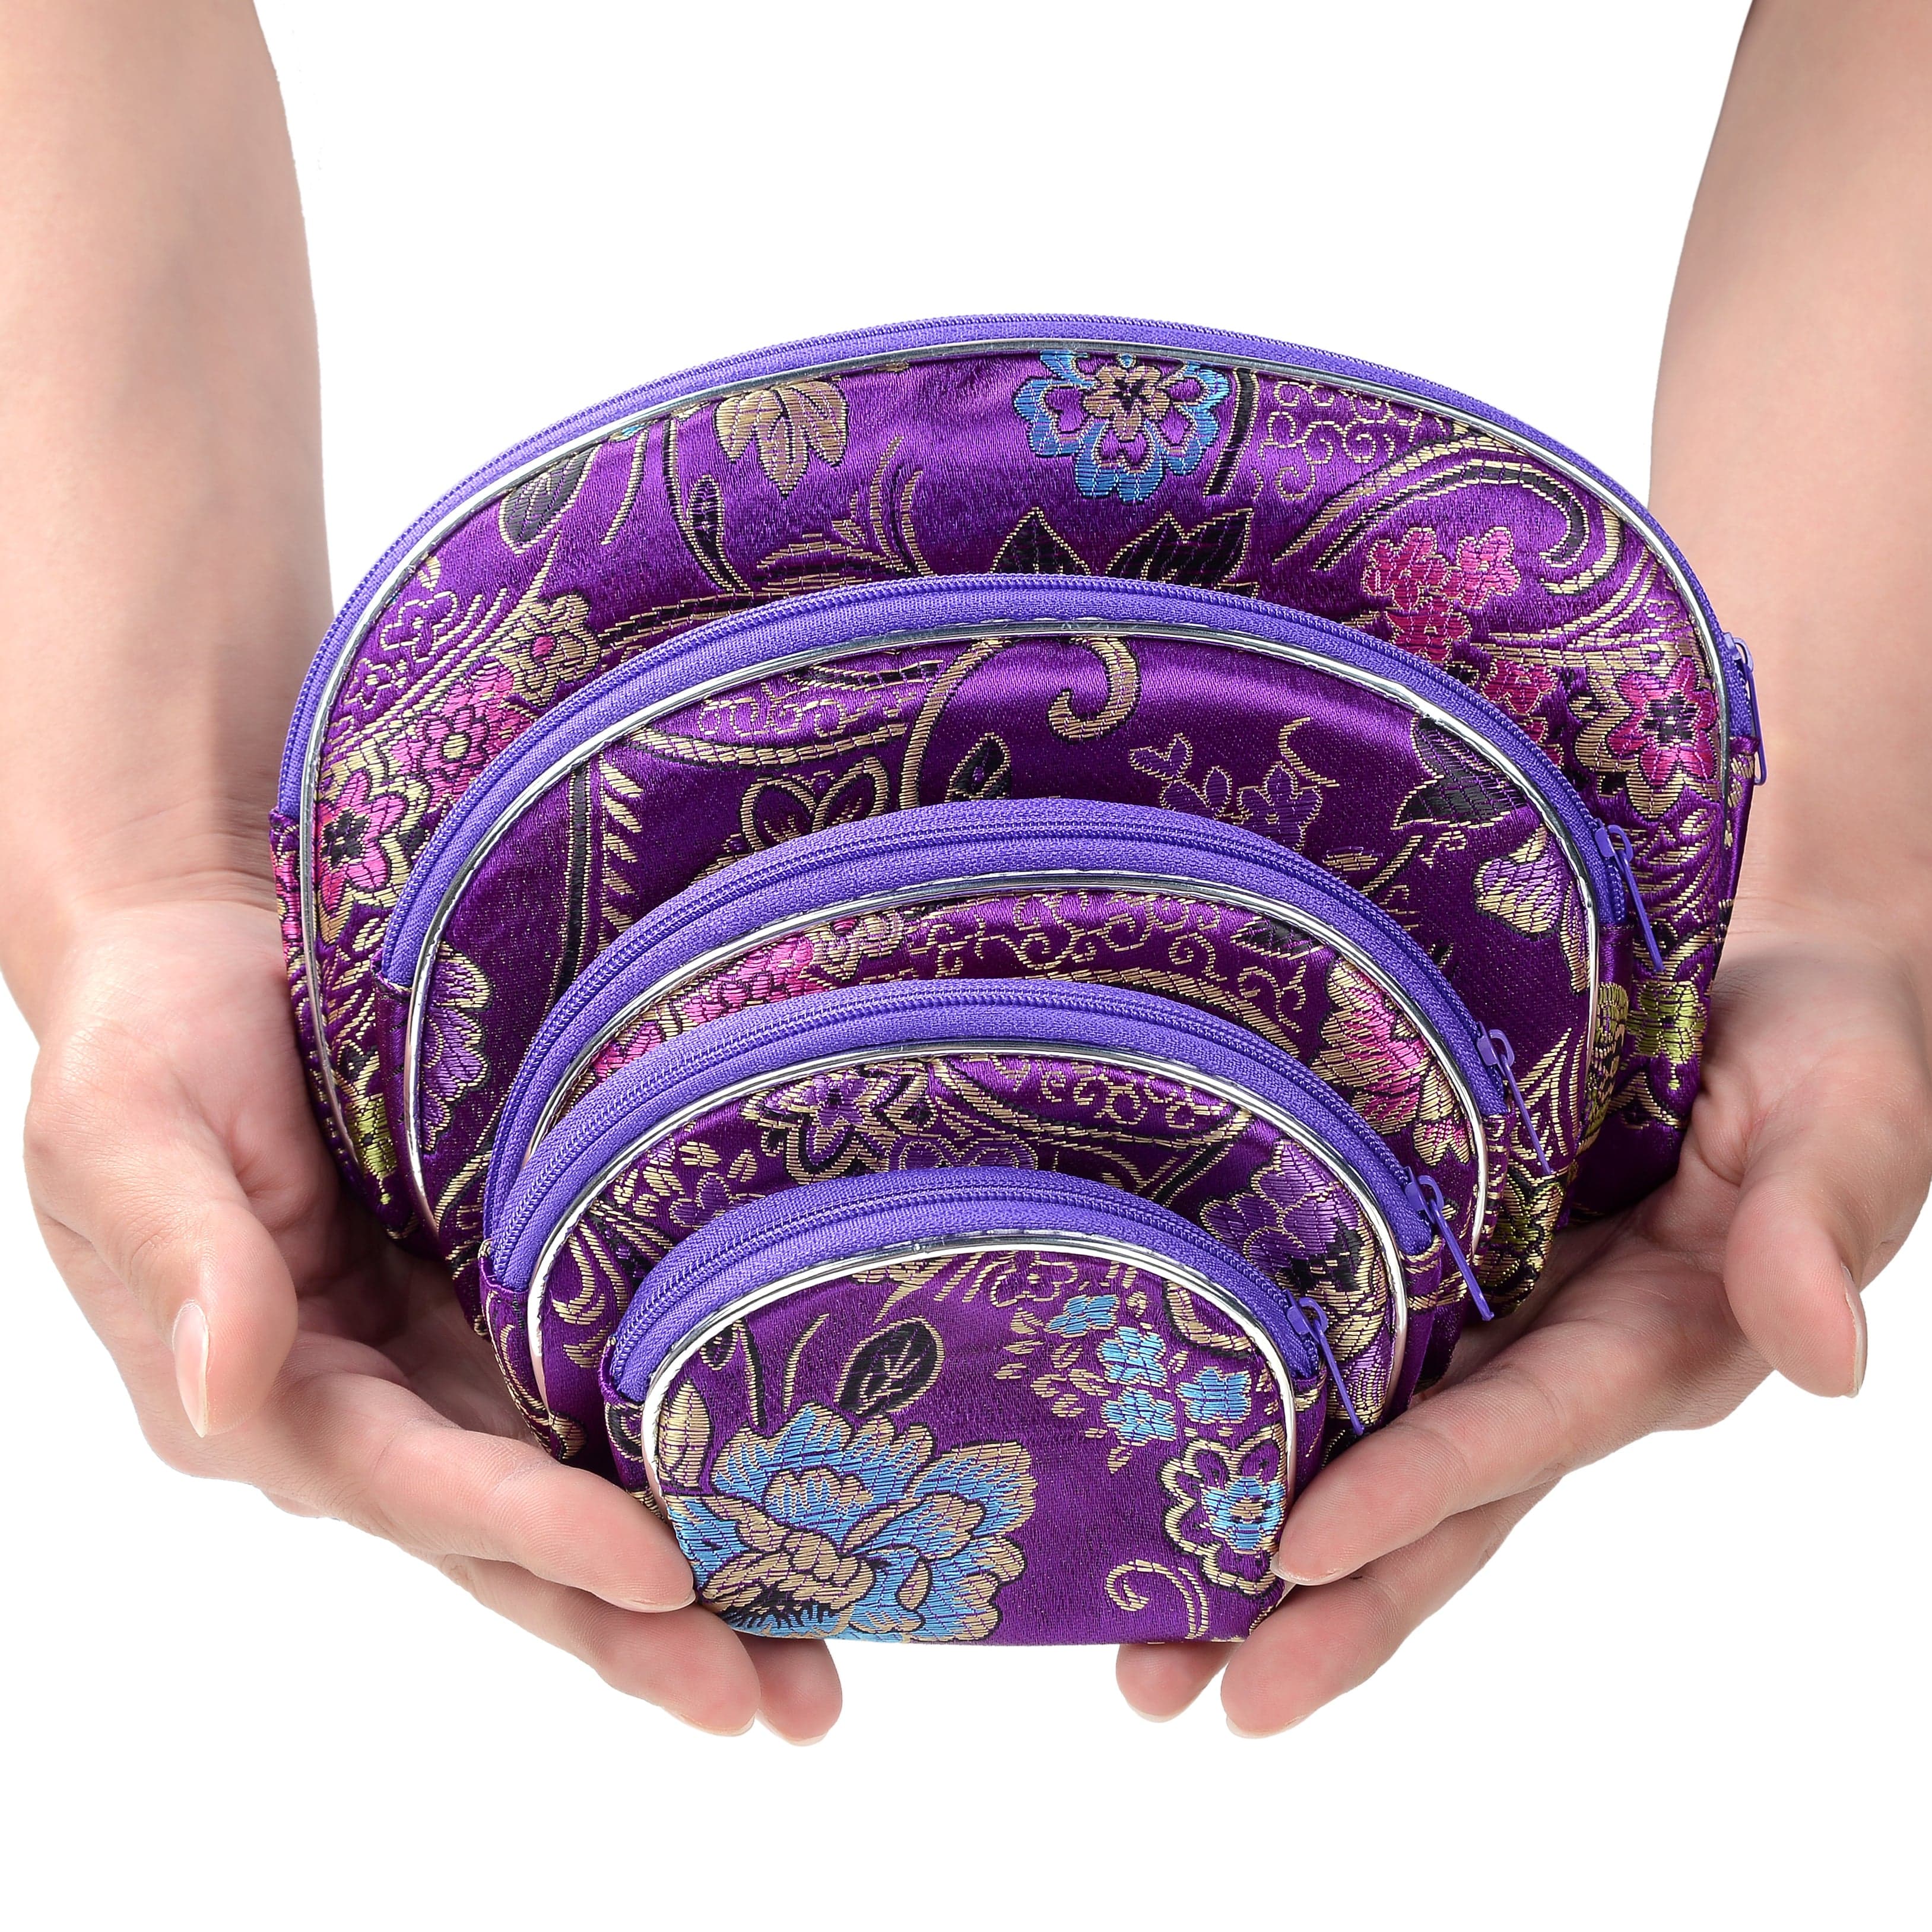 Kalifano JEWELRY POUCHES Purple Silk Pouch - 5 piece set POUCH5-VT